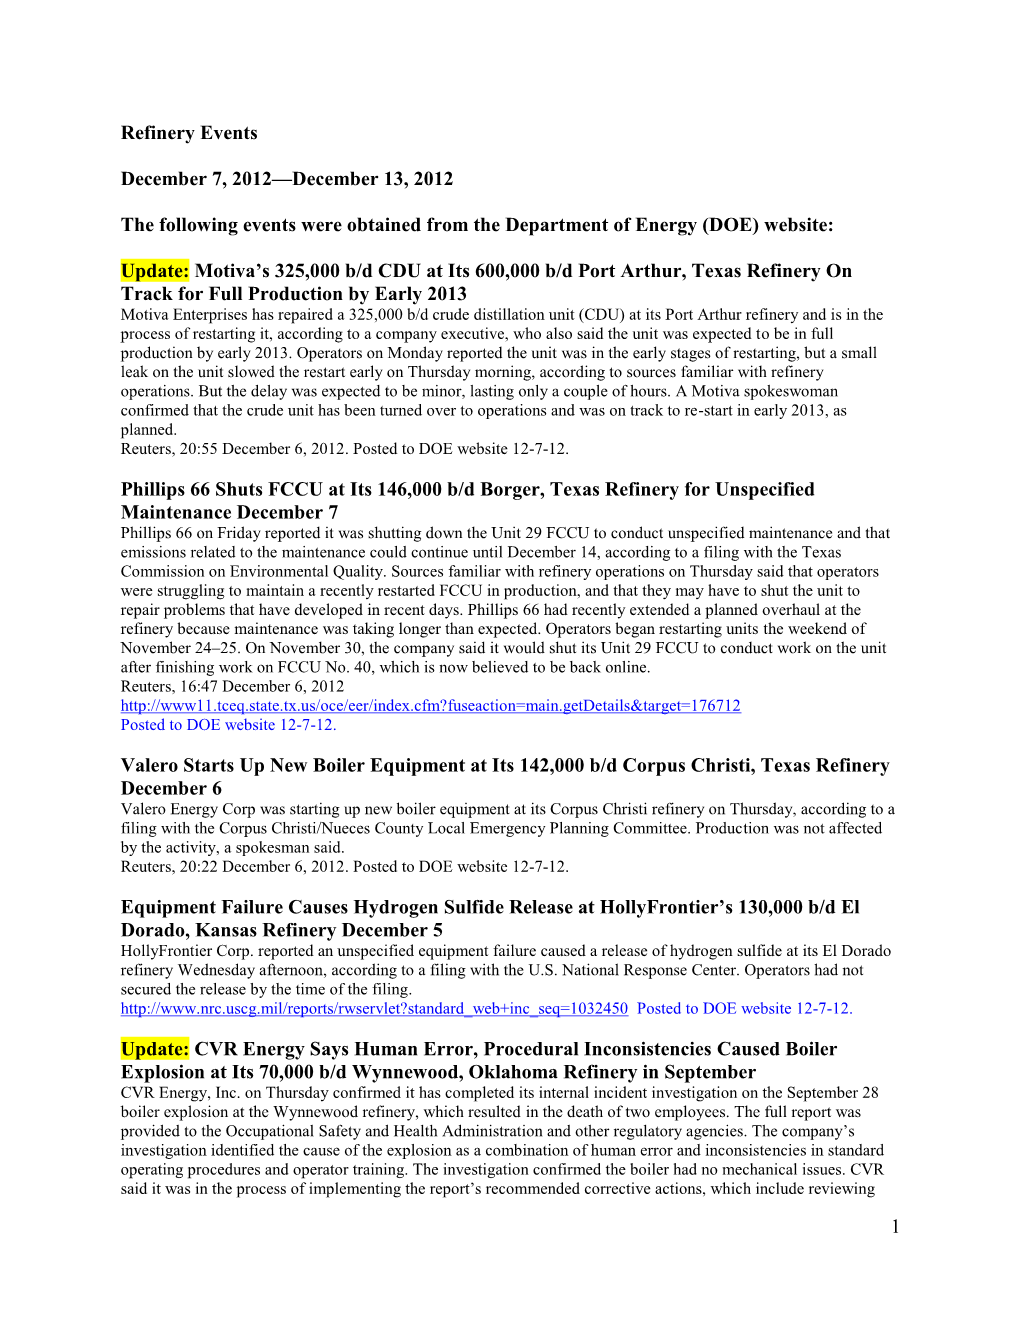 Refinery-Events-Dec-7-13-2012.Pdf